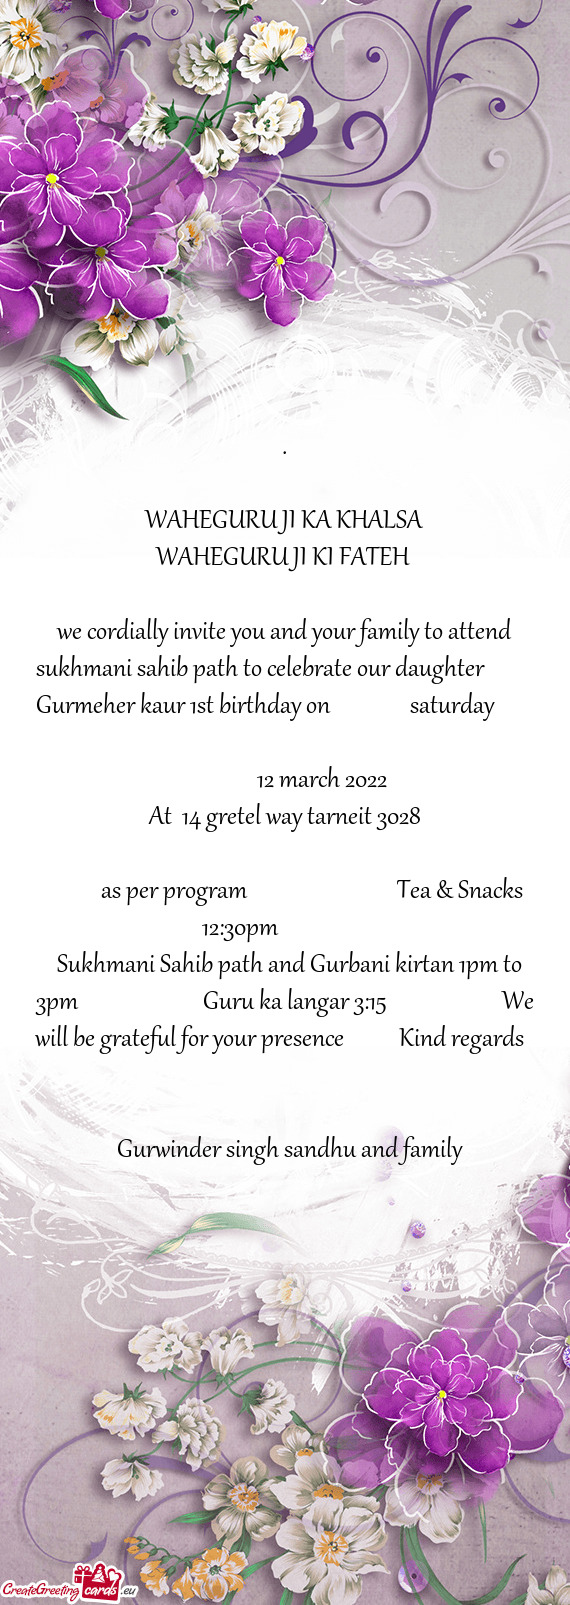 Gurmeher kaur 1st birthday on    saturday       12 march 2022